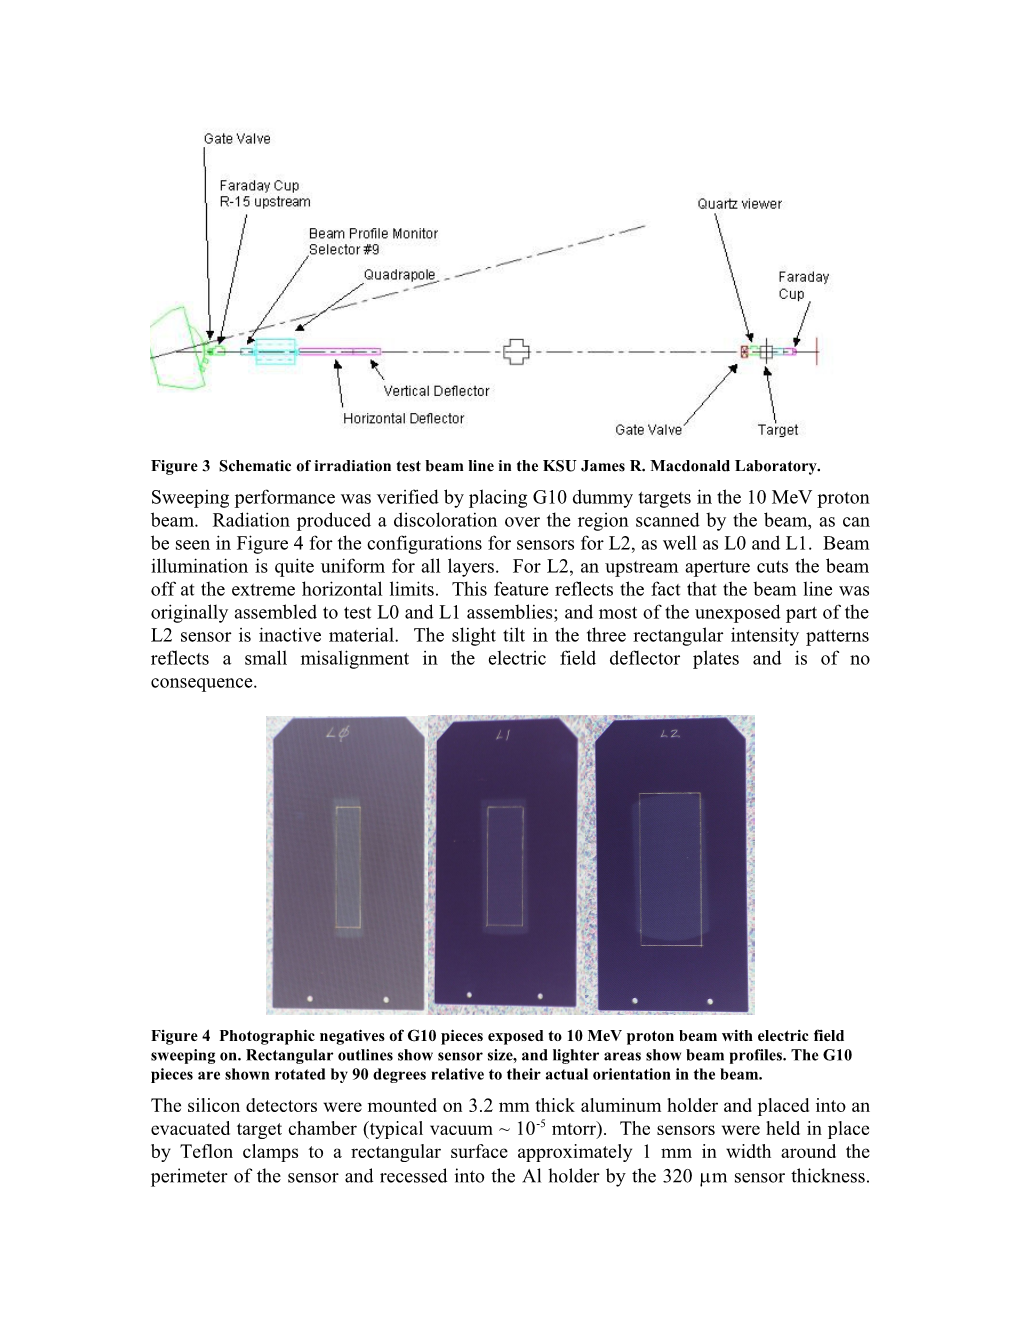 Radiation Characteristics of Hamamatsu Layer 2 Sensors for the D0 Run IIB Upgrade